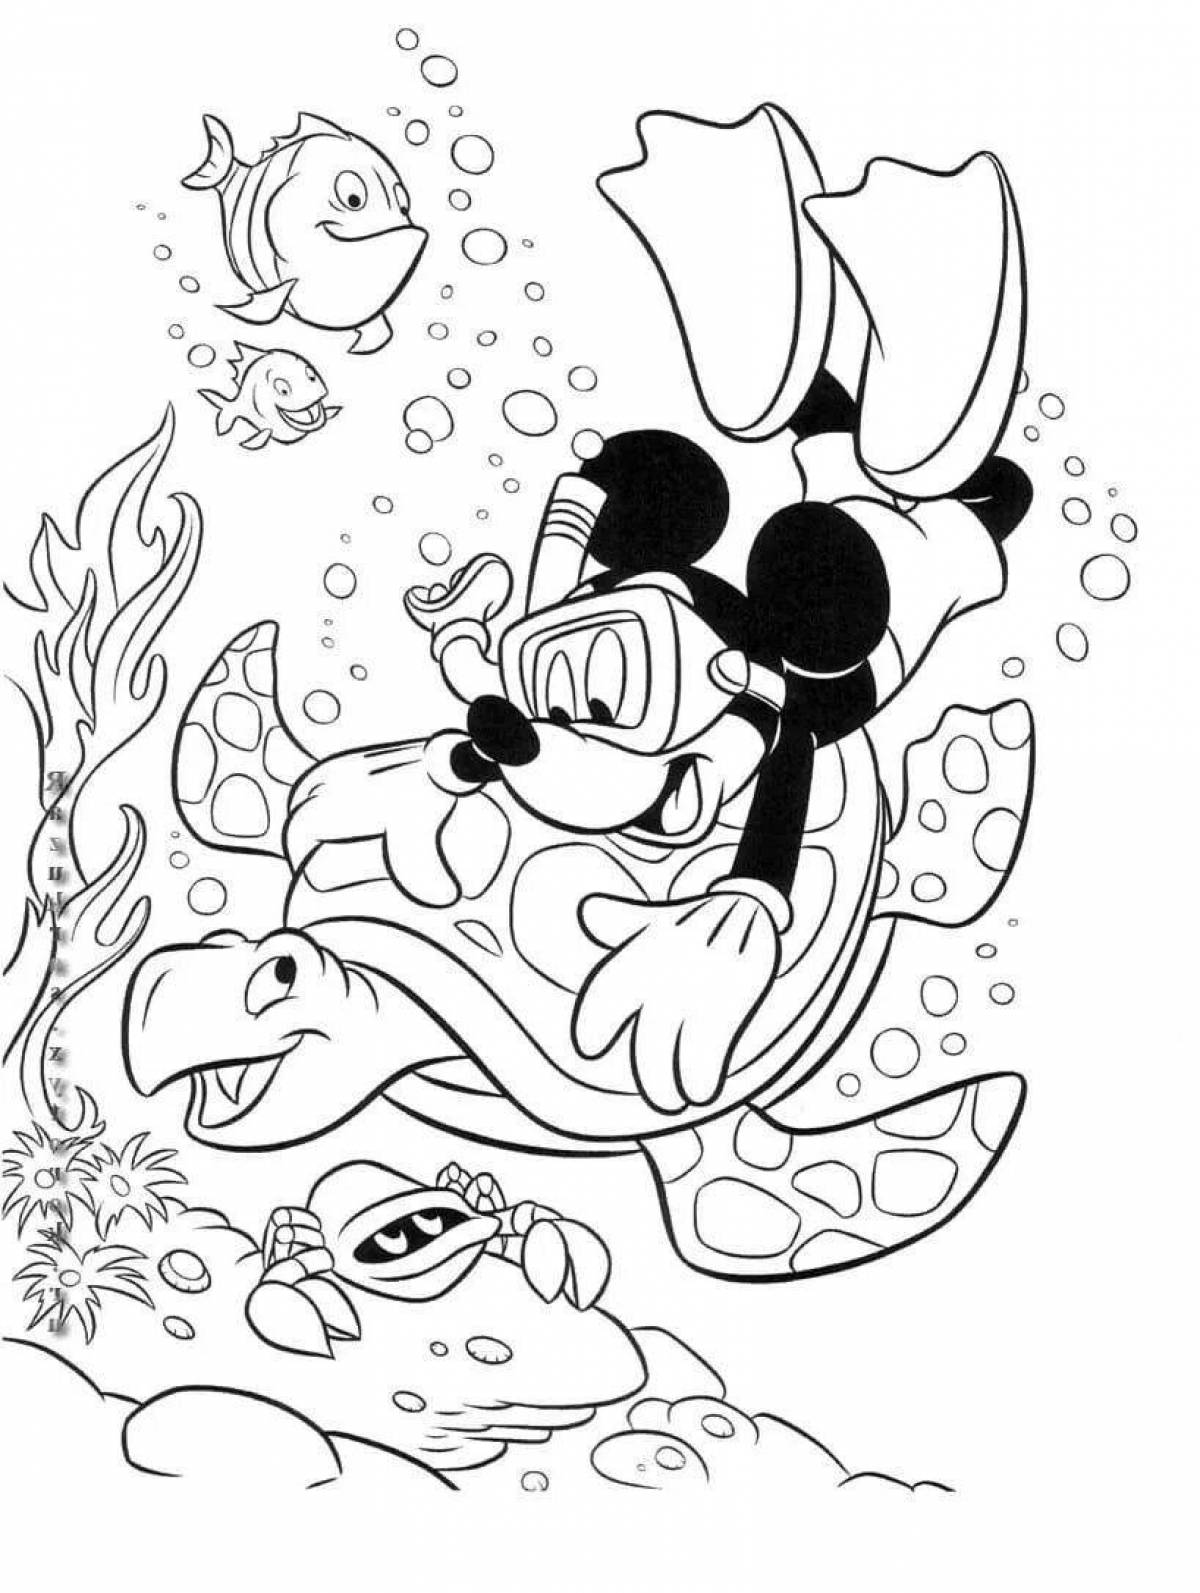 Fun Disney cartoon coloring book